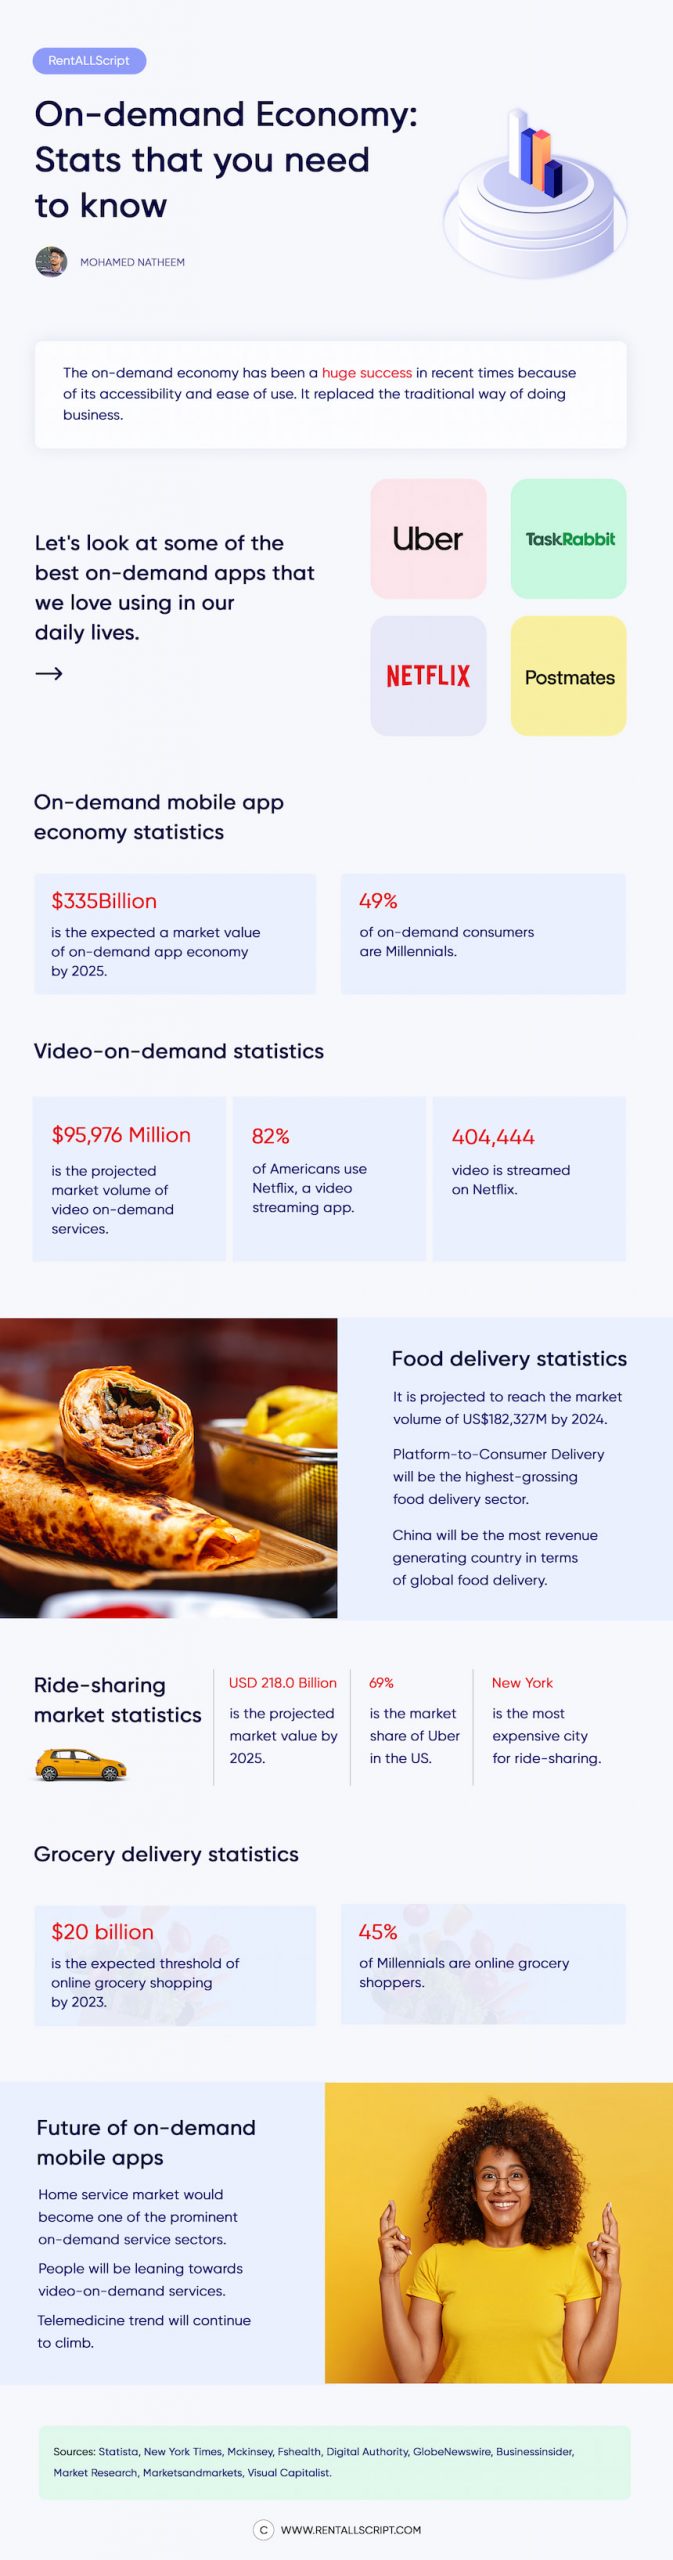 on-demand industry statistics infographic